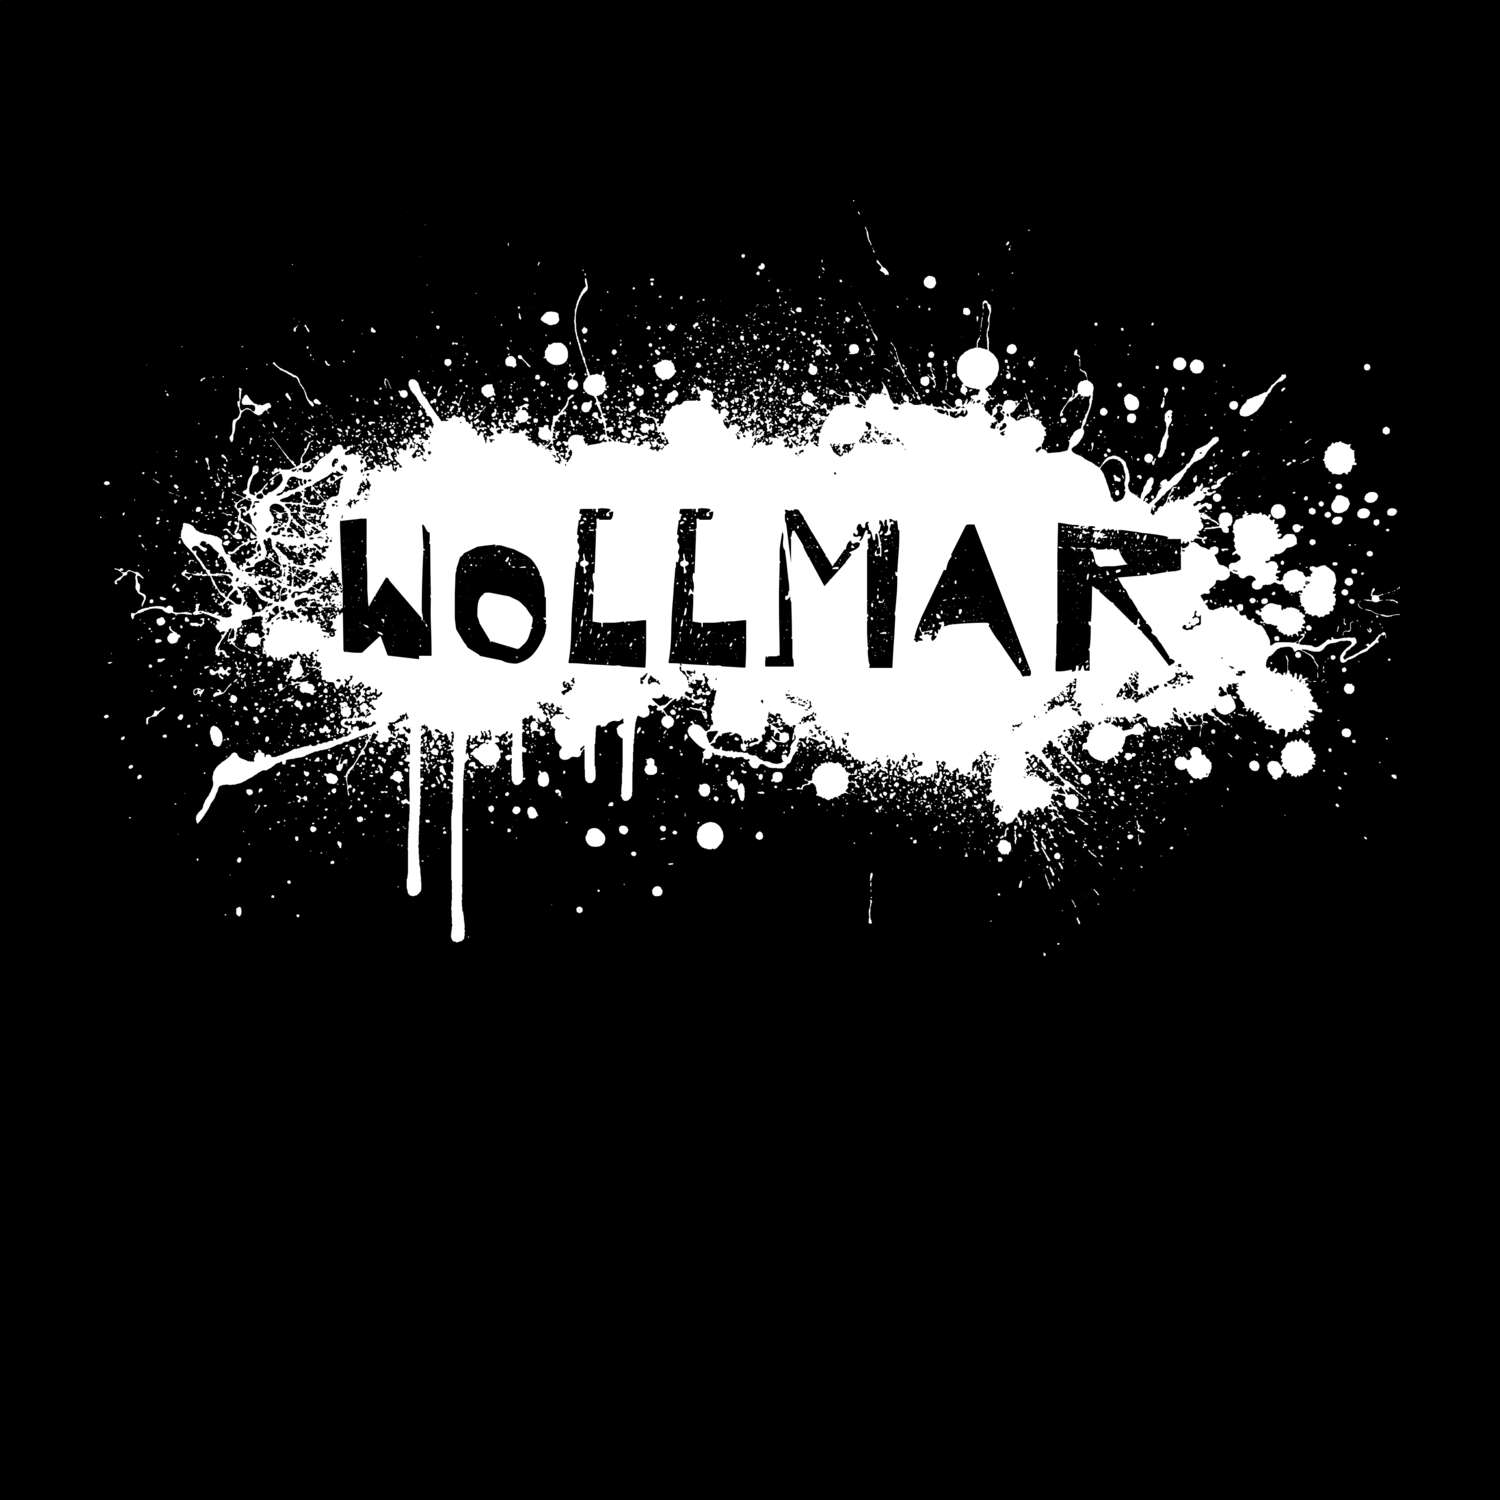 Wollmar T-Shirt »Paint Splash Punk«